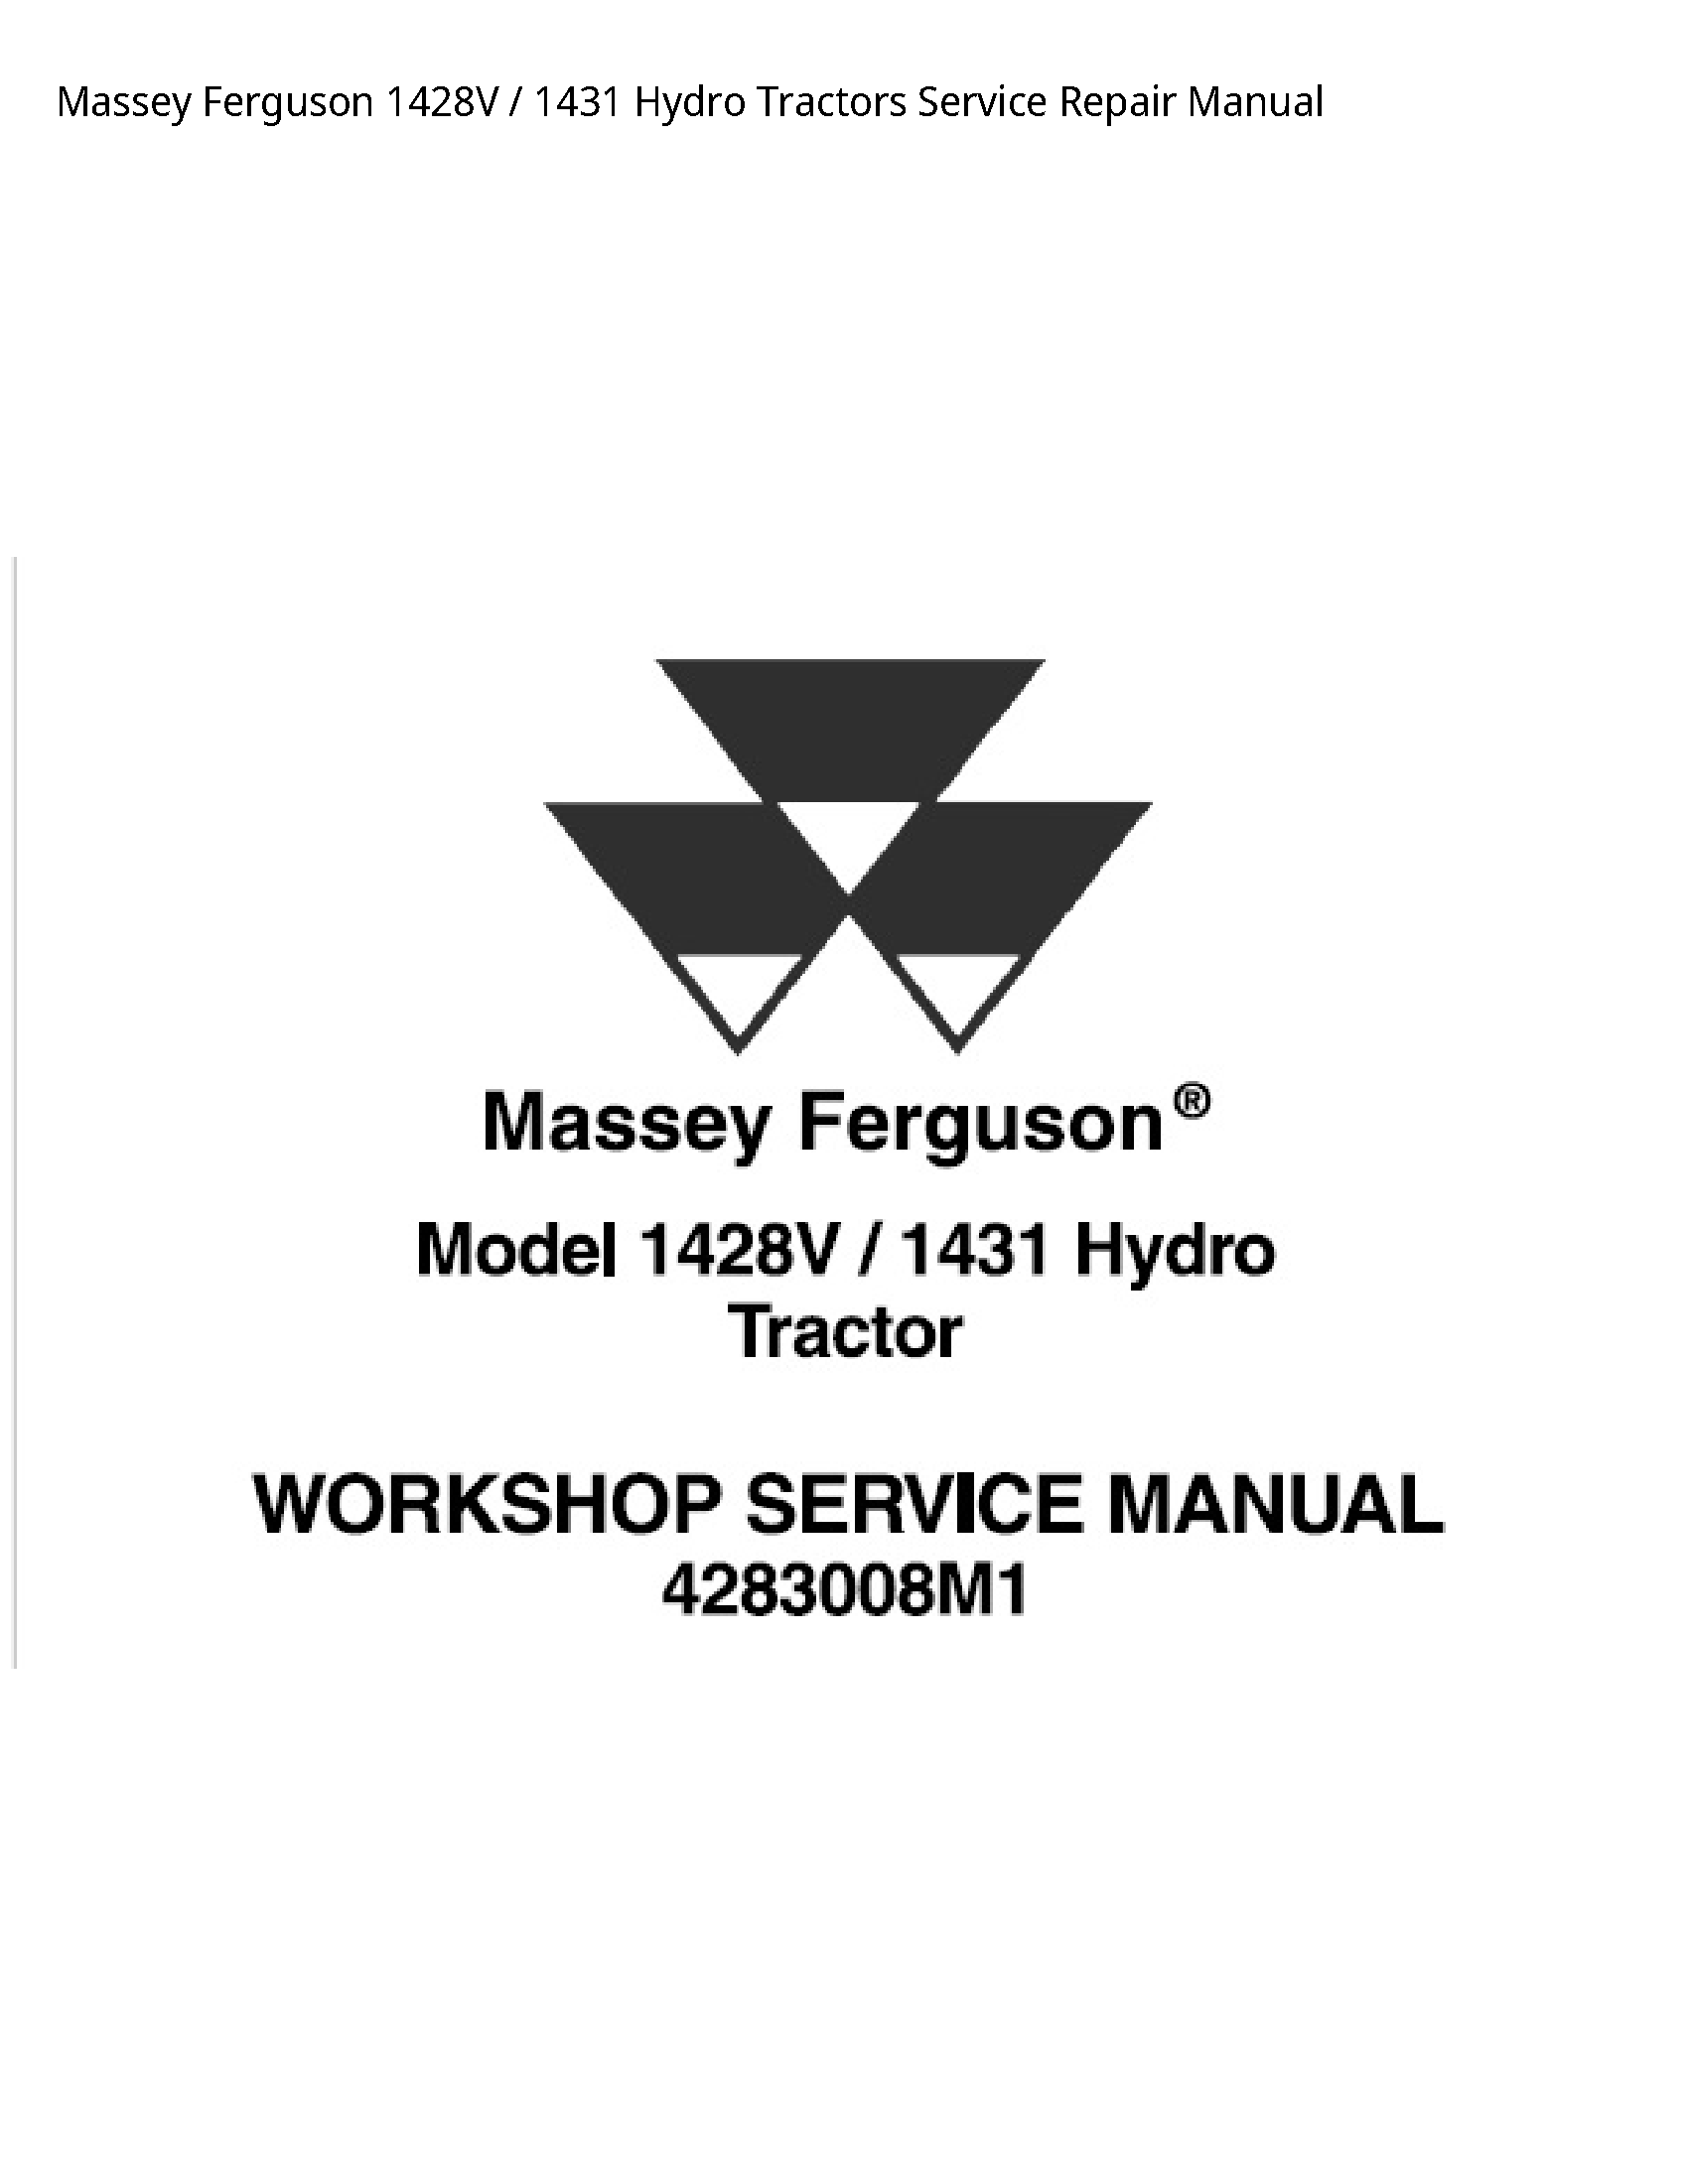 Massey Ferguson 1428V Hydro Tractors manual